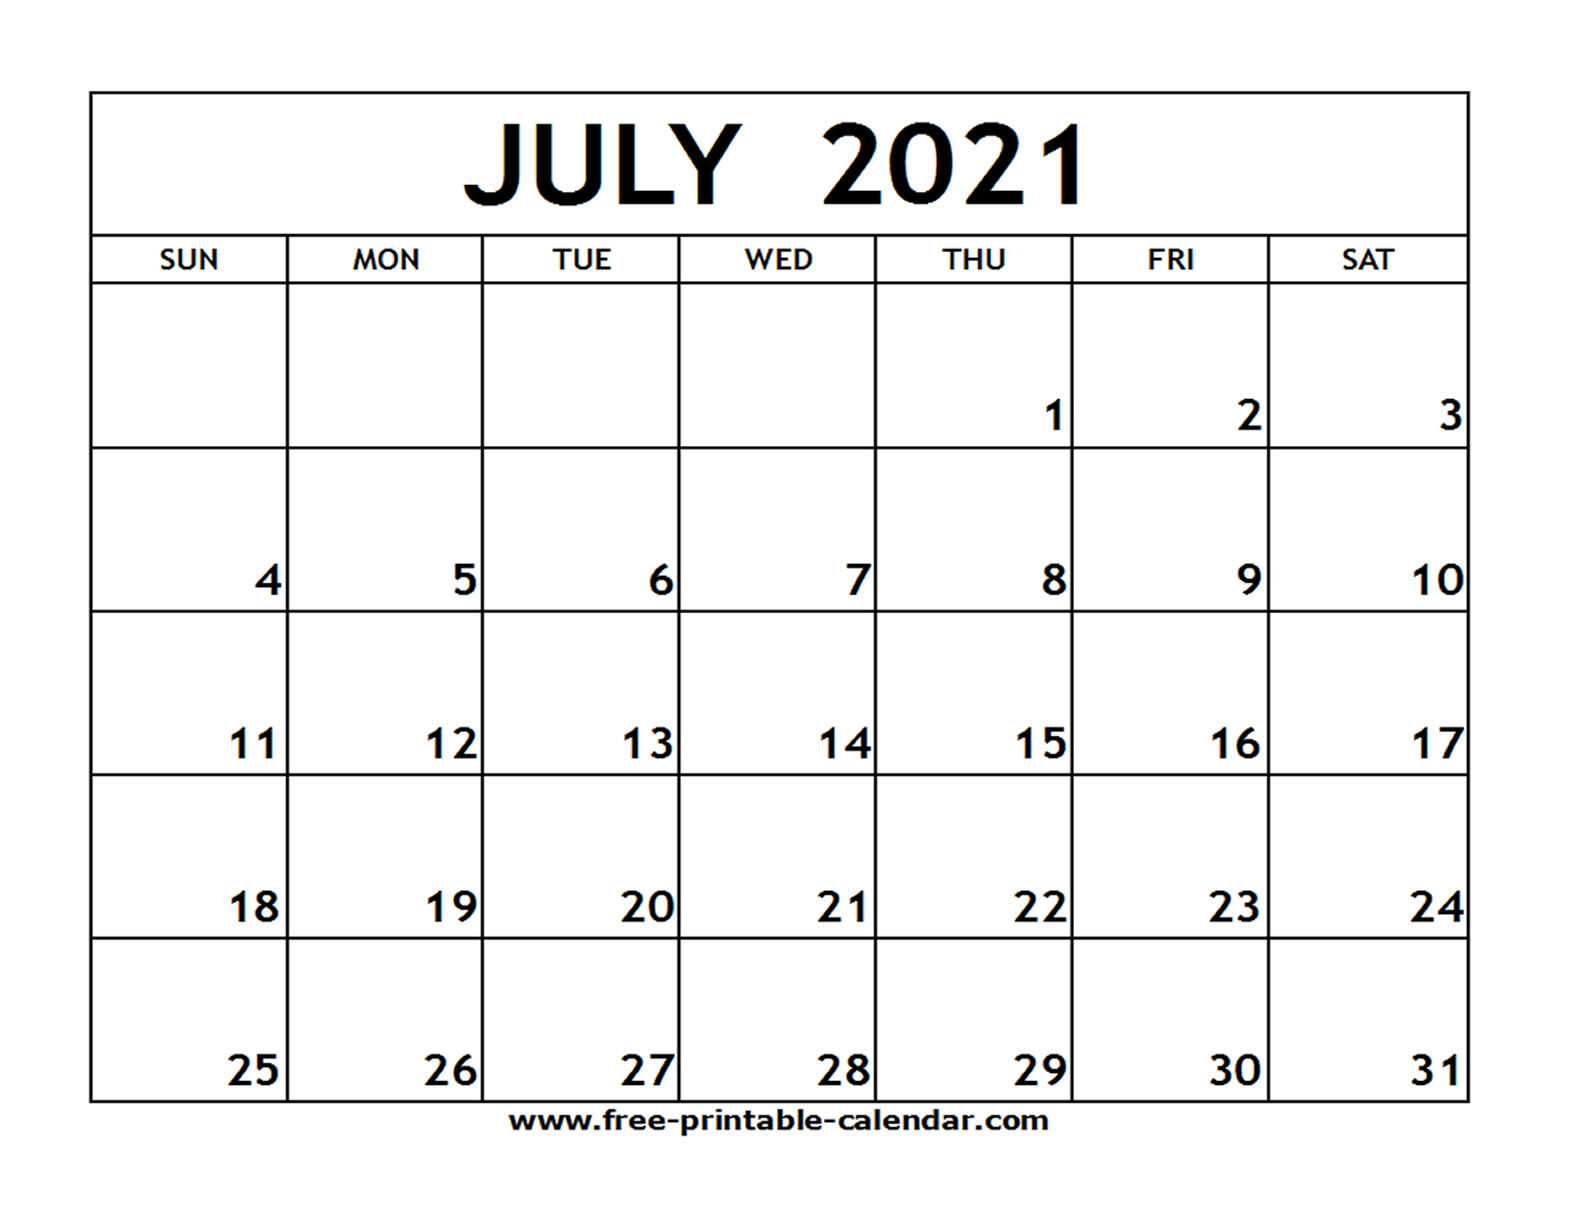 July 2021 Printable Calendar - Free-Printable-Calendar-Printable Free 2021 Calendar Without Downloading